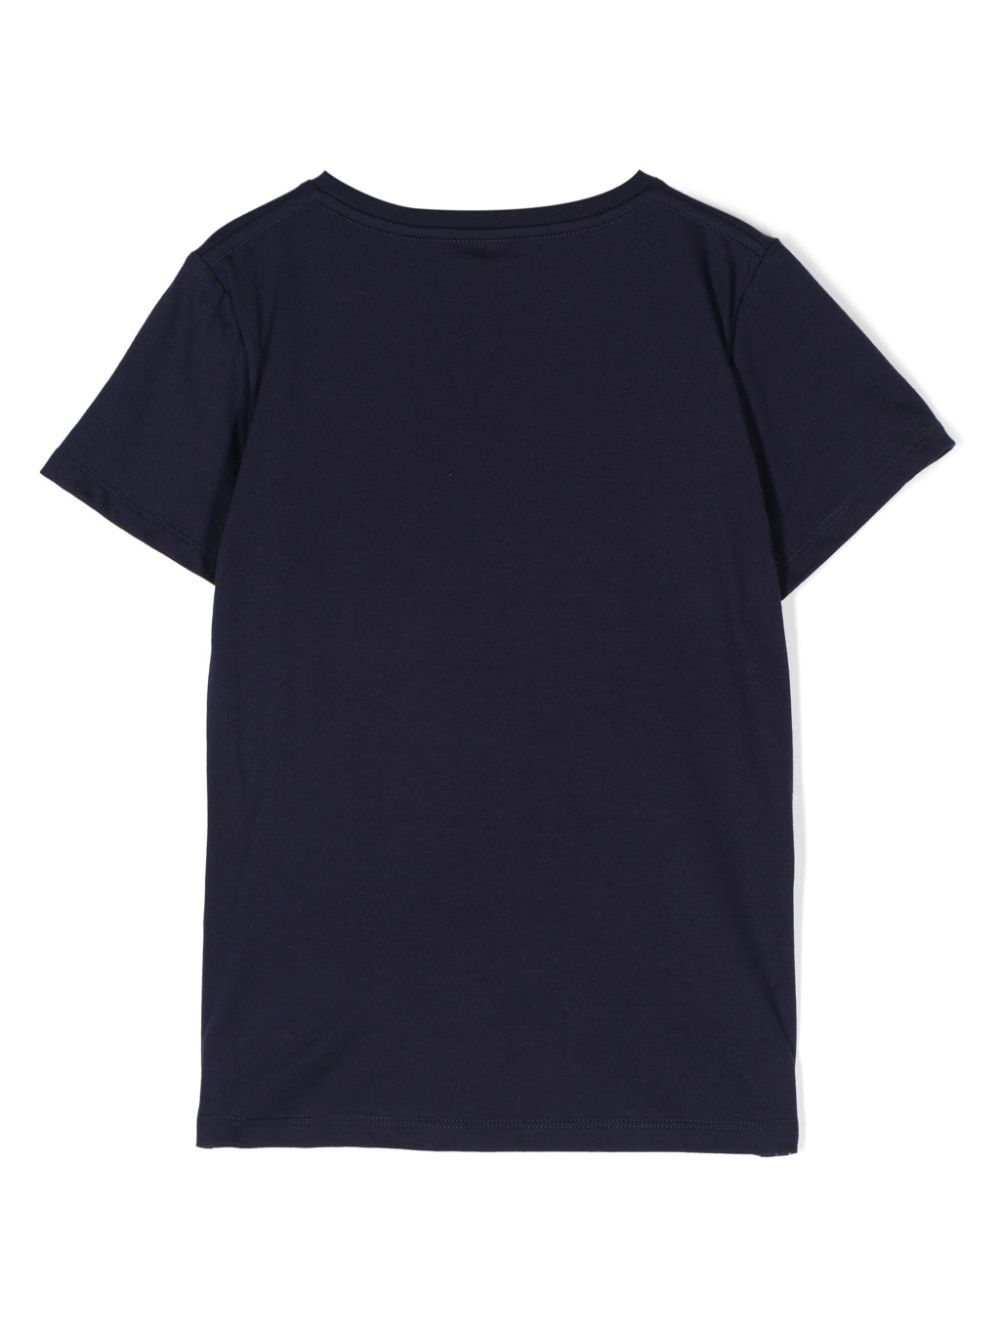 Unisex navy blue cotton t-shirt with logo